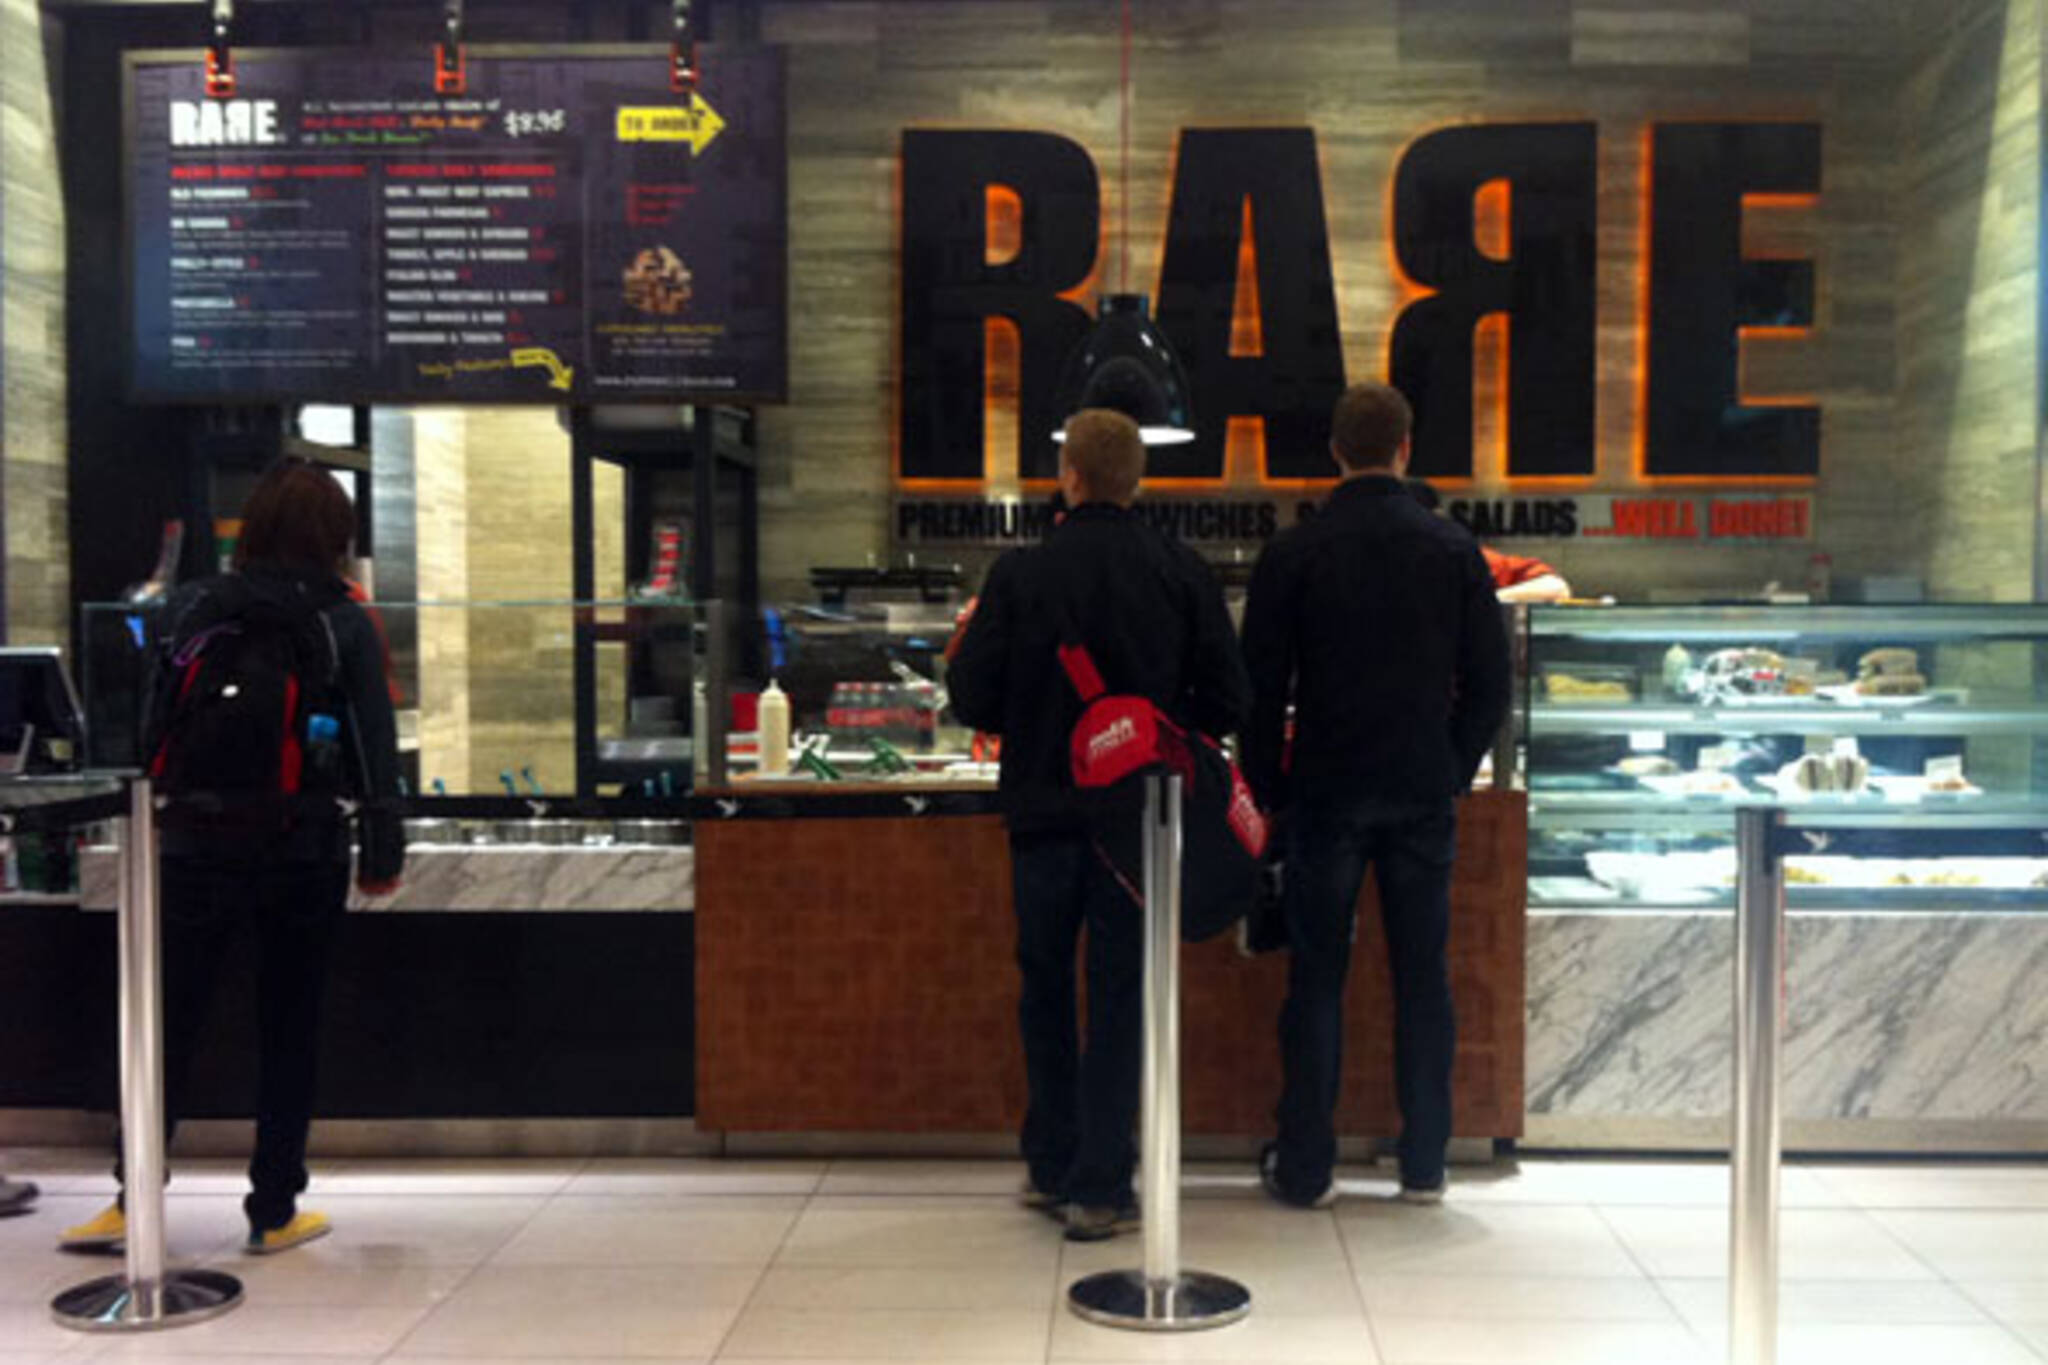 RARE (Urban Eatery) Toronto